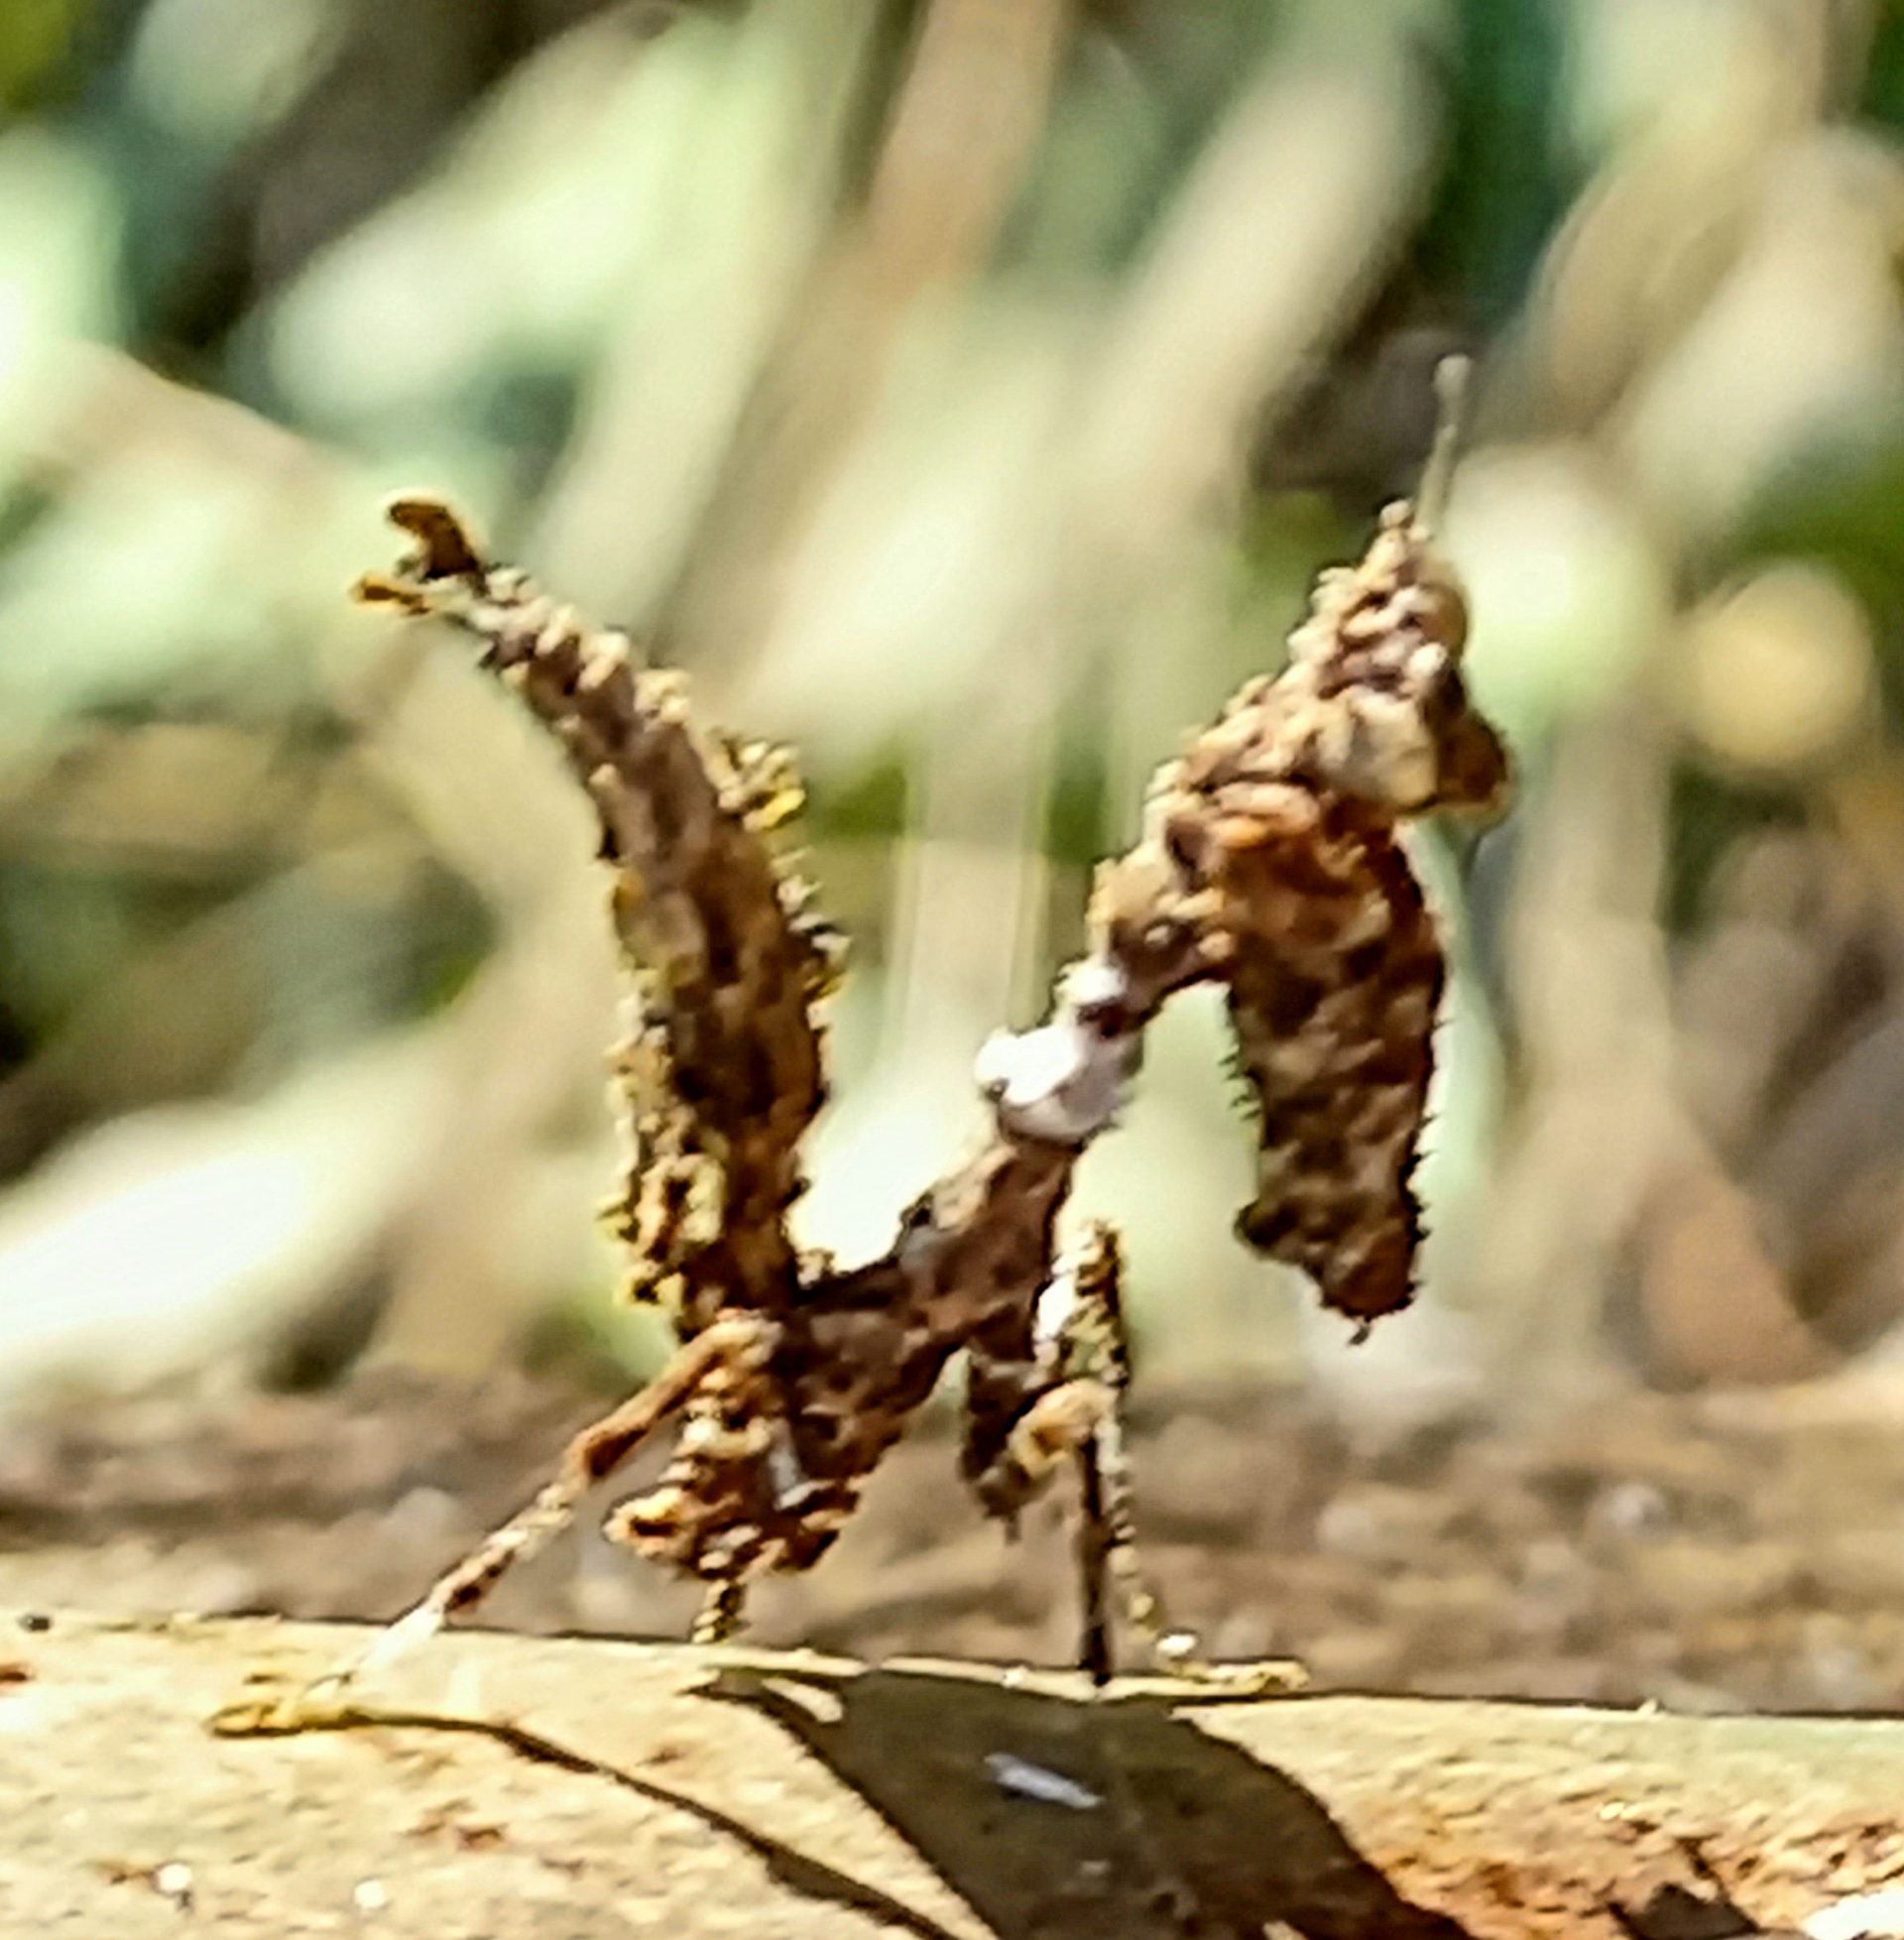 Dead Leaf Praying Mantis